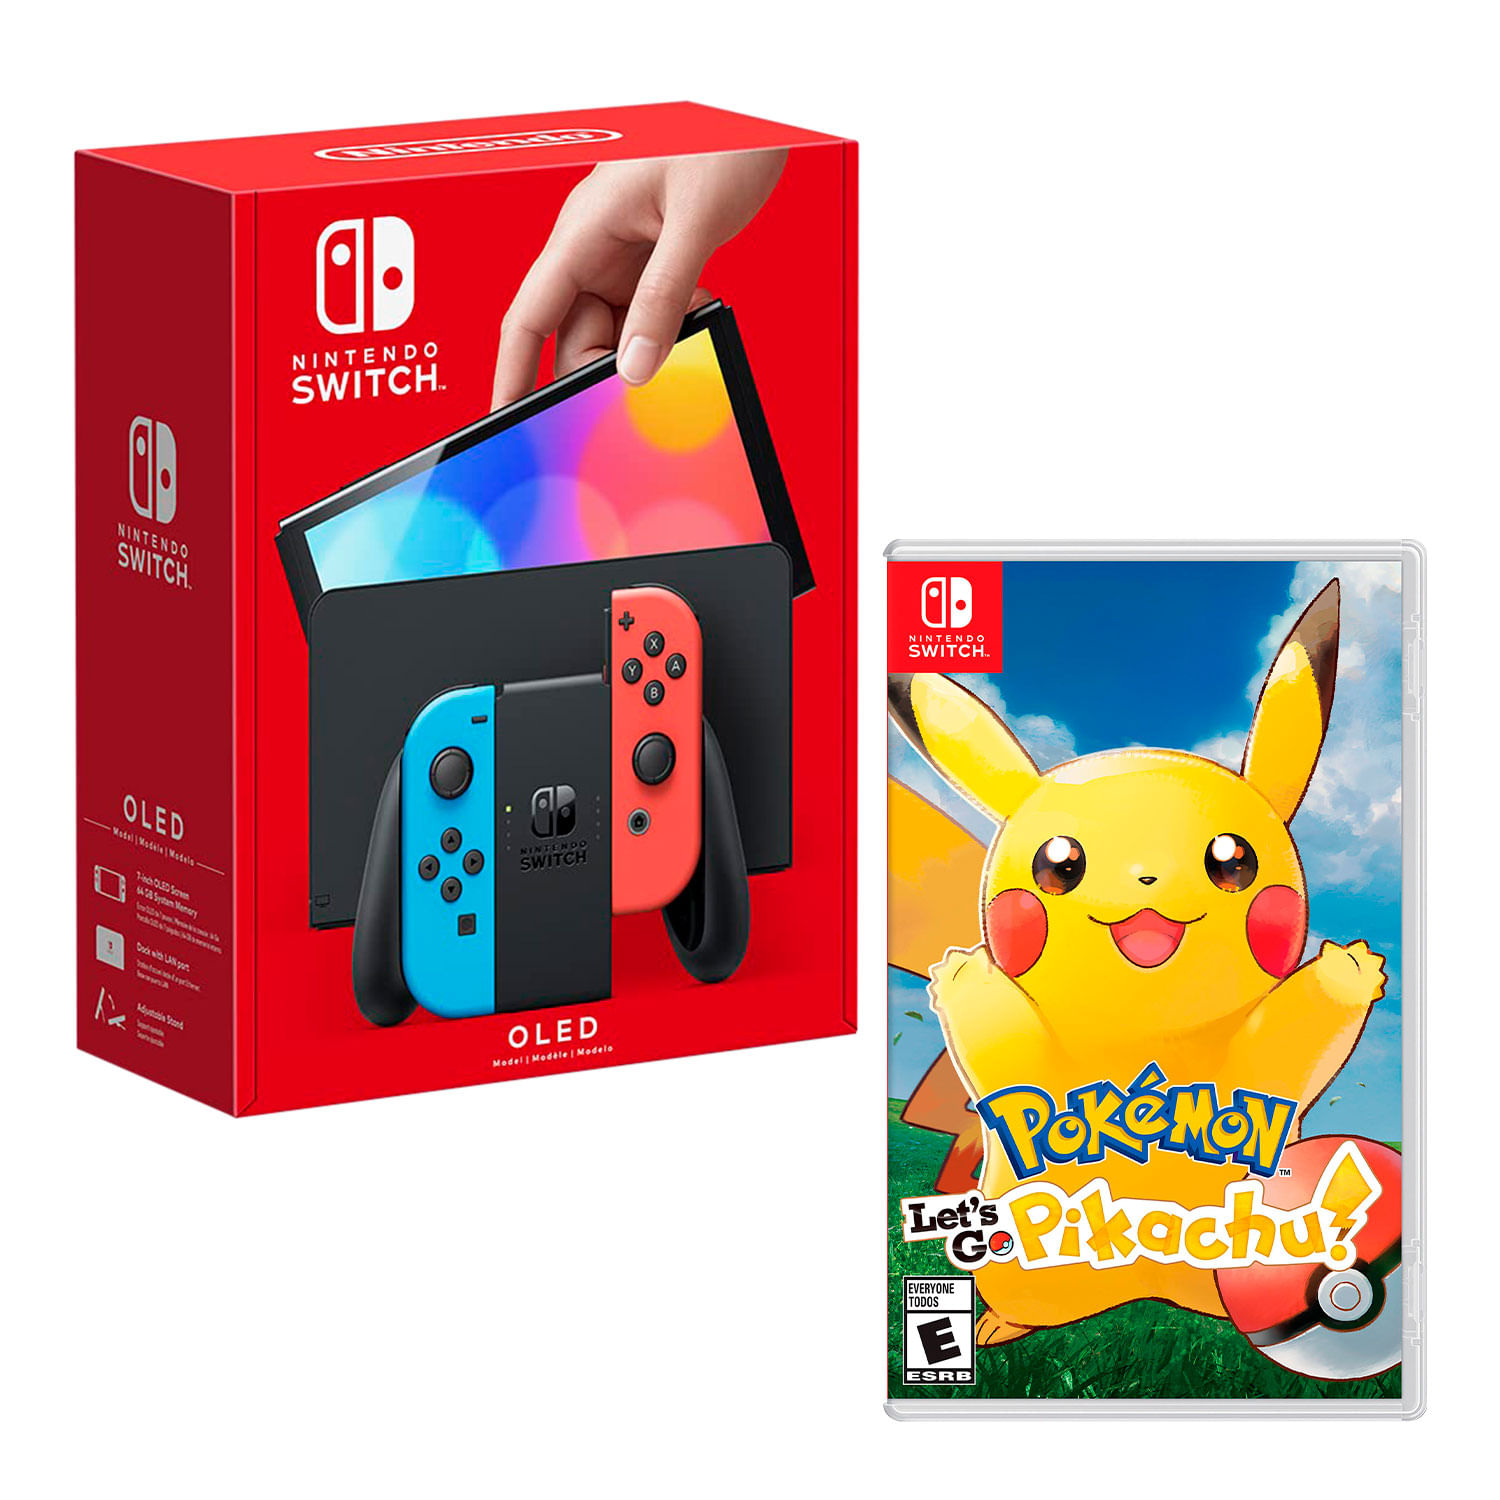 Consola Nintendo Switch Modelo Oled Neon + Pokemon Lets Go Pikachu